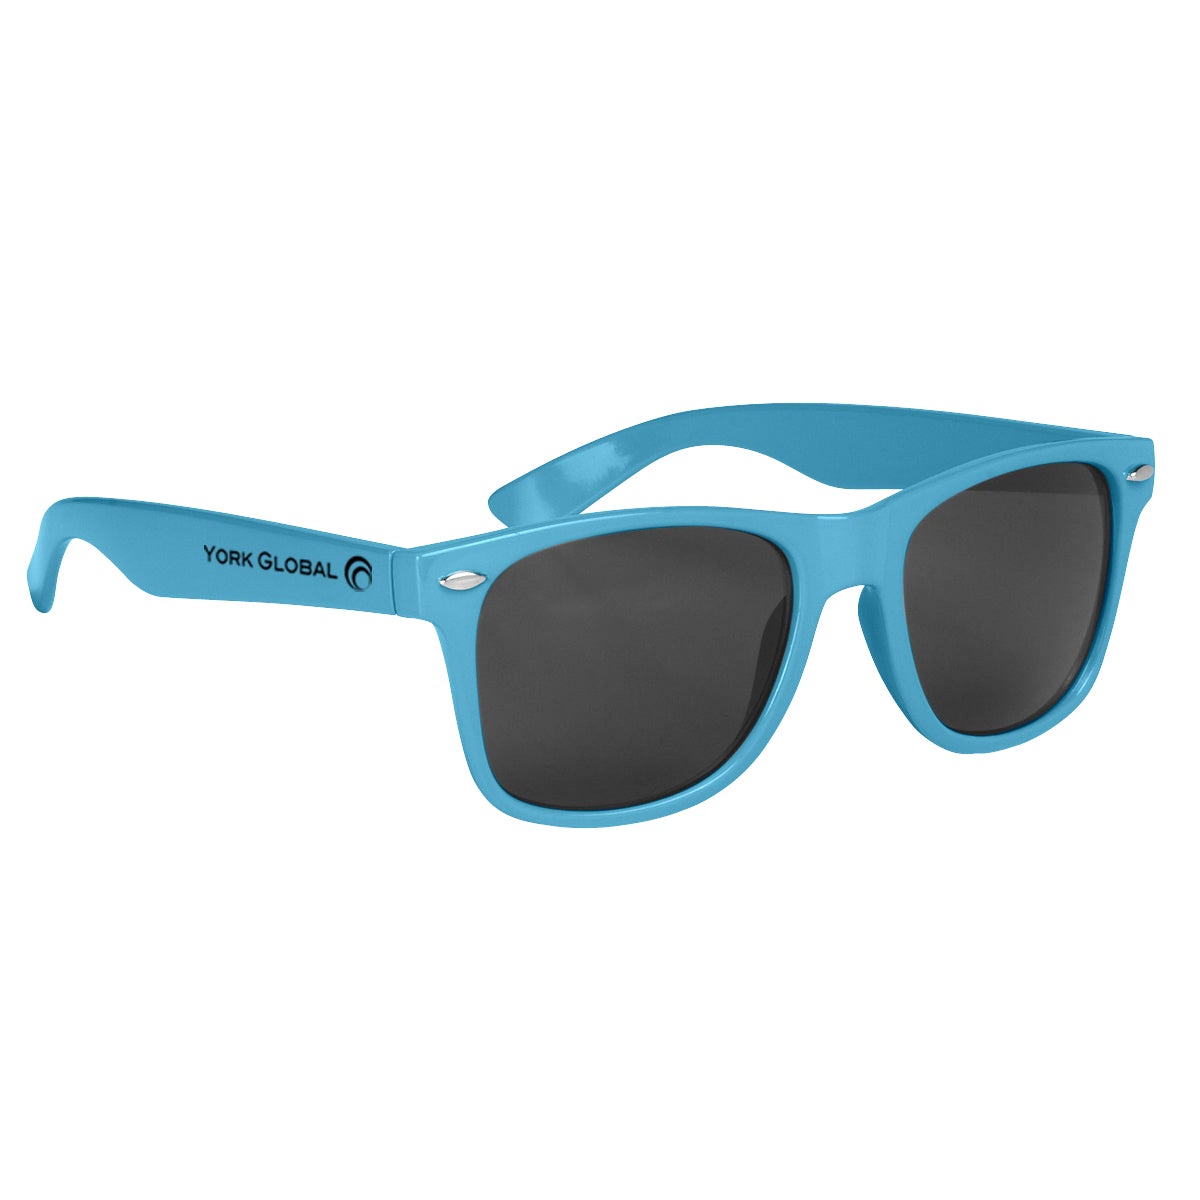 Malibu Sunglasses Sunglasses Hit Promo Light Blue Single Color